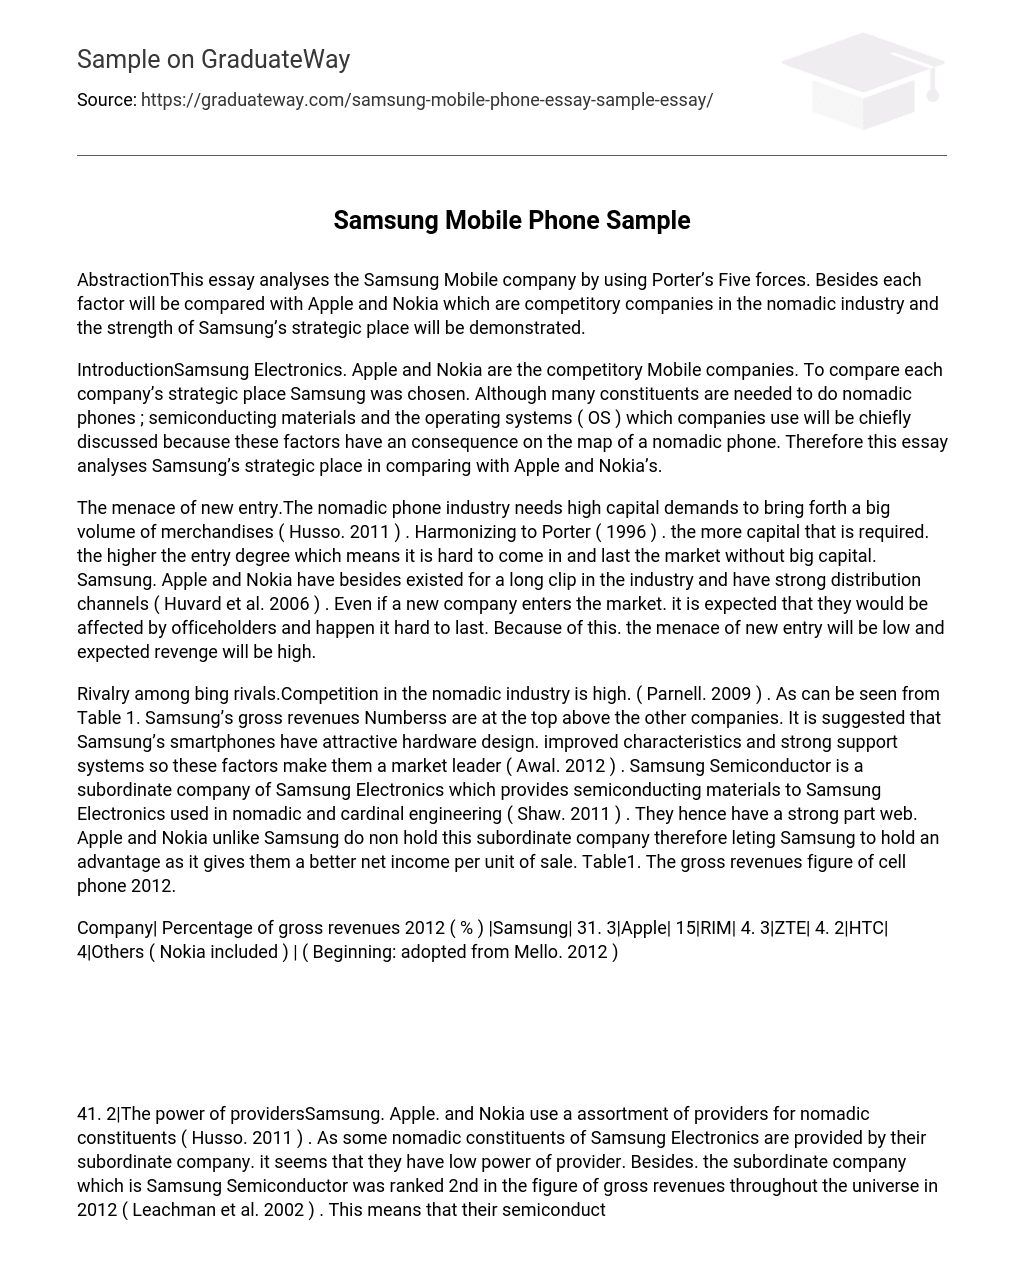 Samsung Mobile Phone Sample